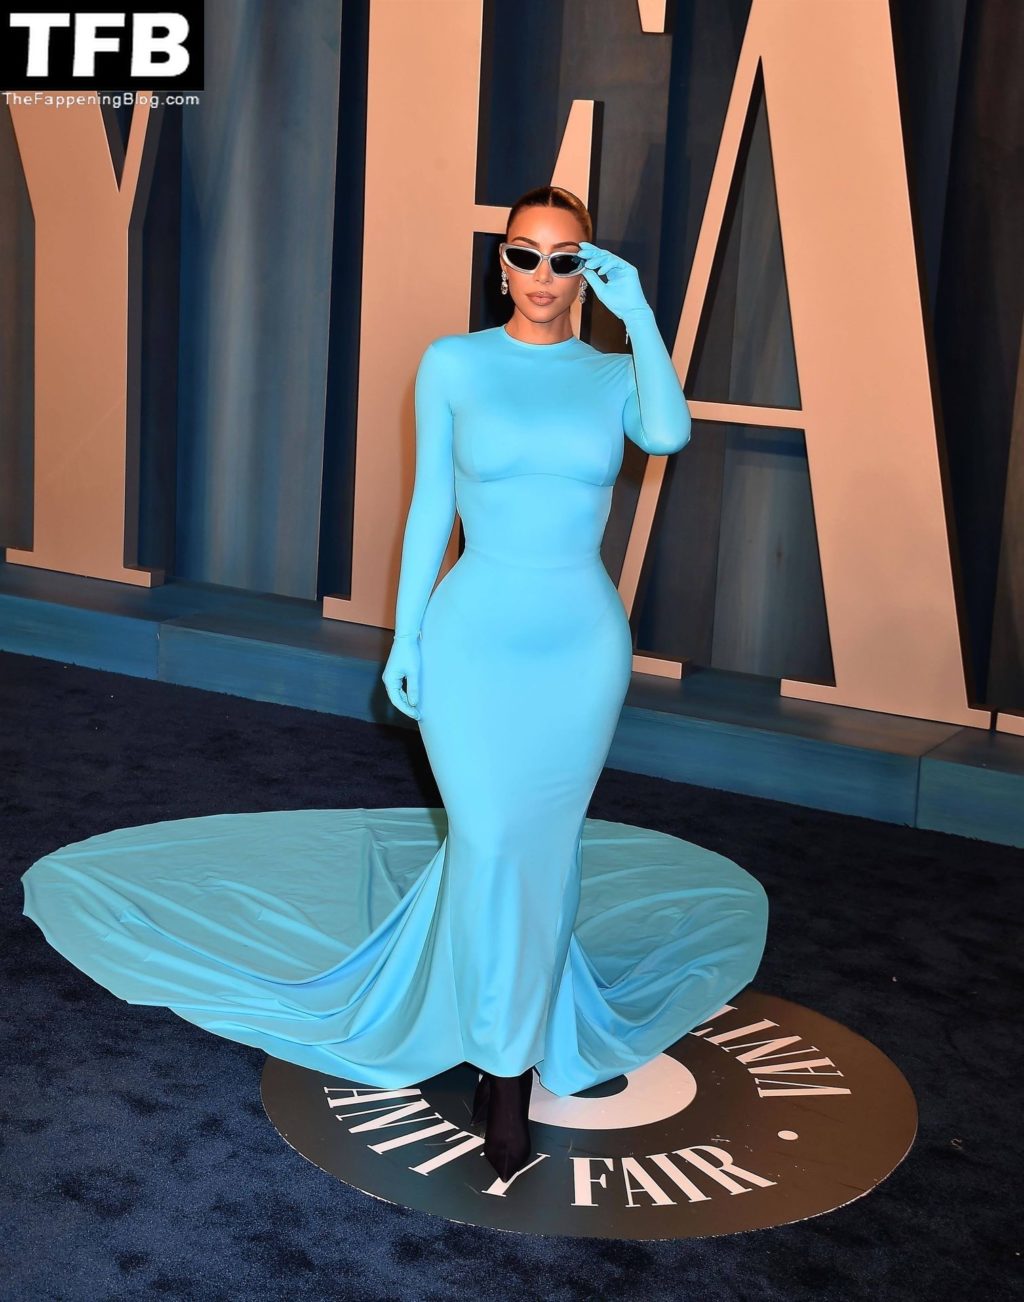 Kim Kardashian Hot 4 thefappeningblog.com  1024x1302 - Kim Kardashian Shows Off Her Curves at the 2022 Vanity Fair Oscar Party (48 Photos)